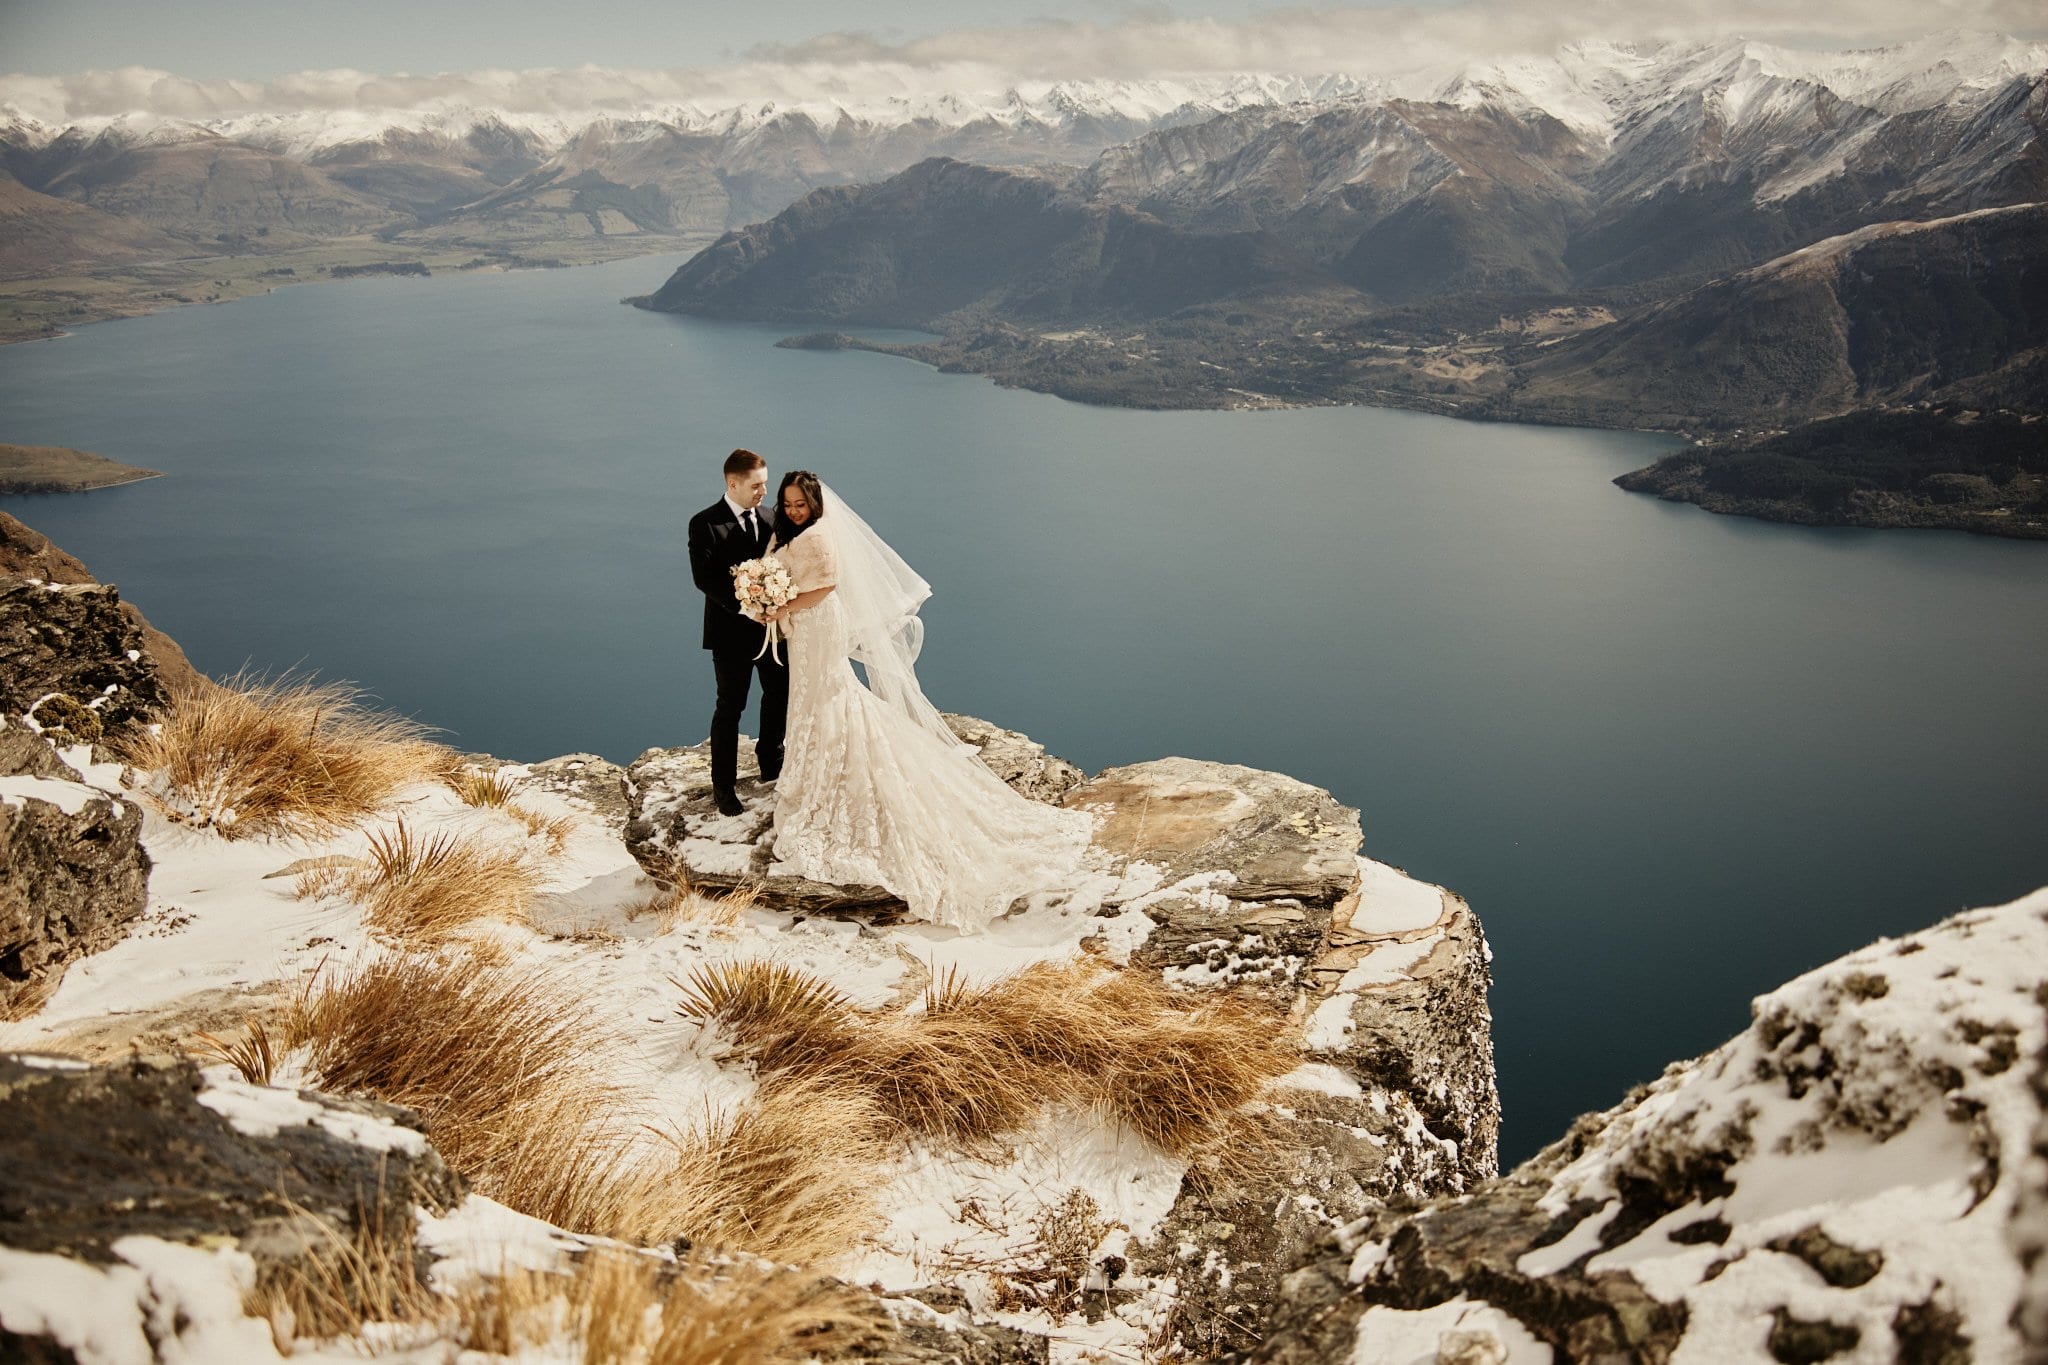 Keywords: bride, groom, mountain, lake.